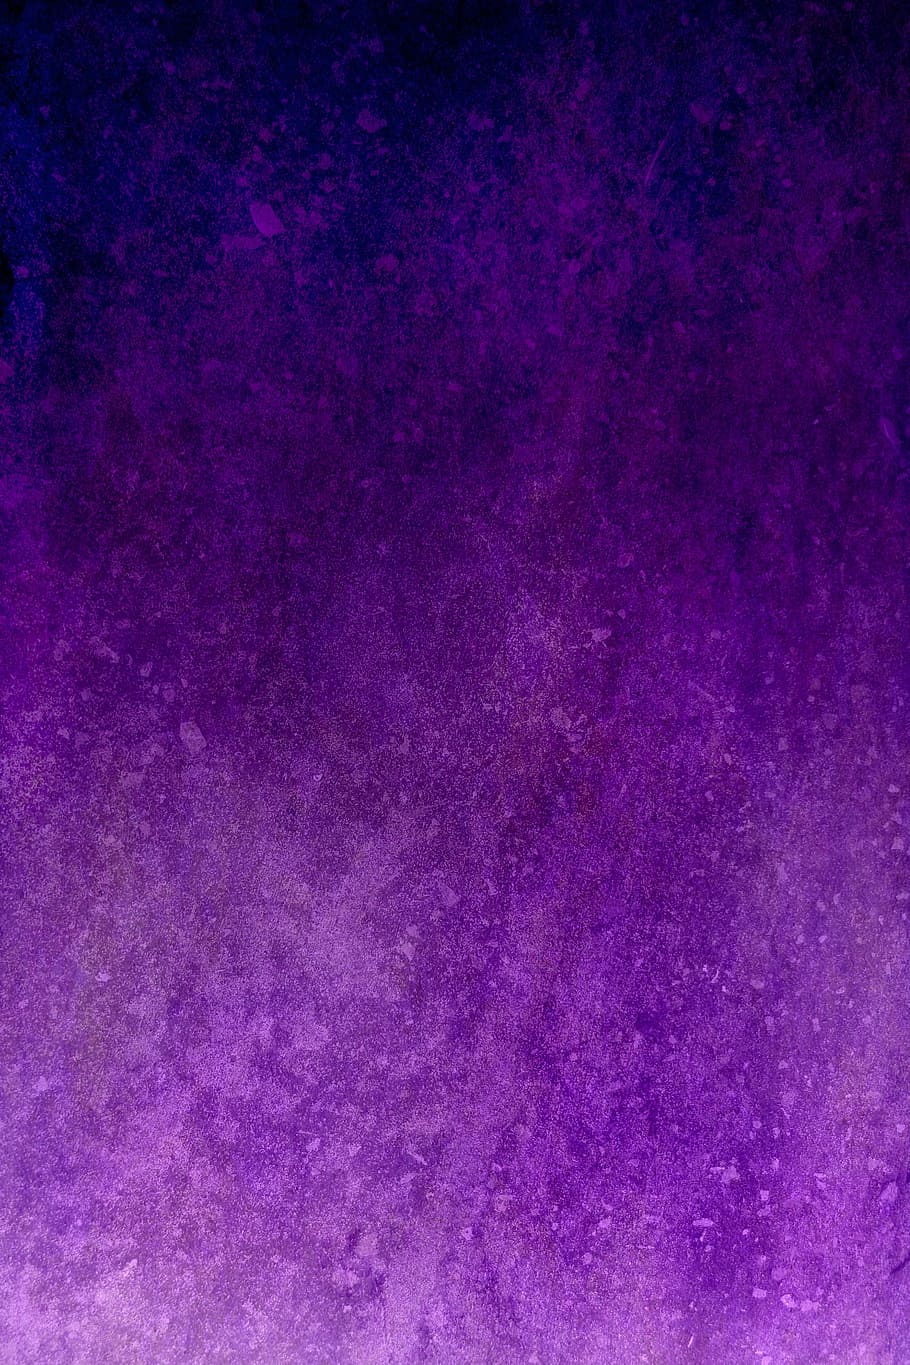 purple surface, purple, background, grunge, texture, fabric, goth, gothic, violet, plum